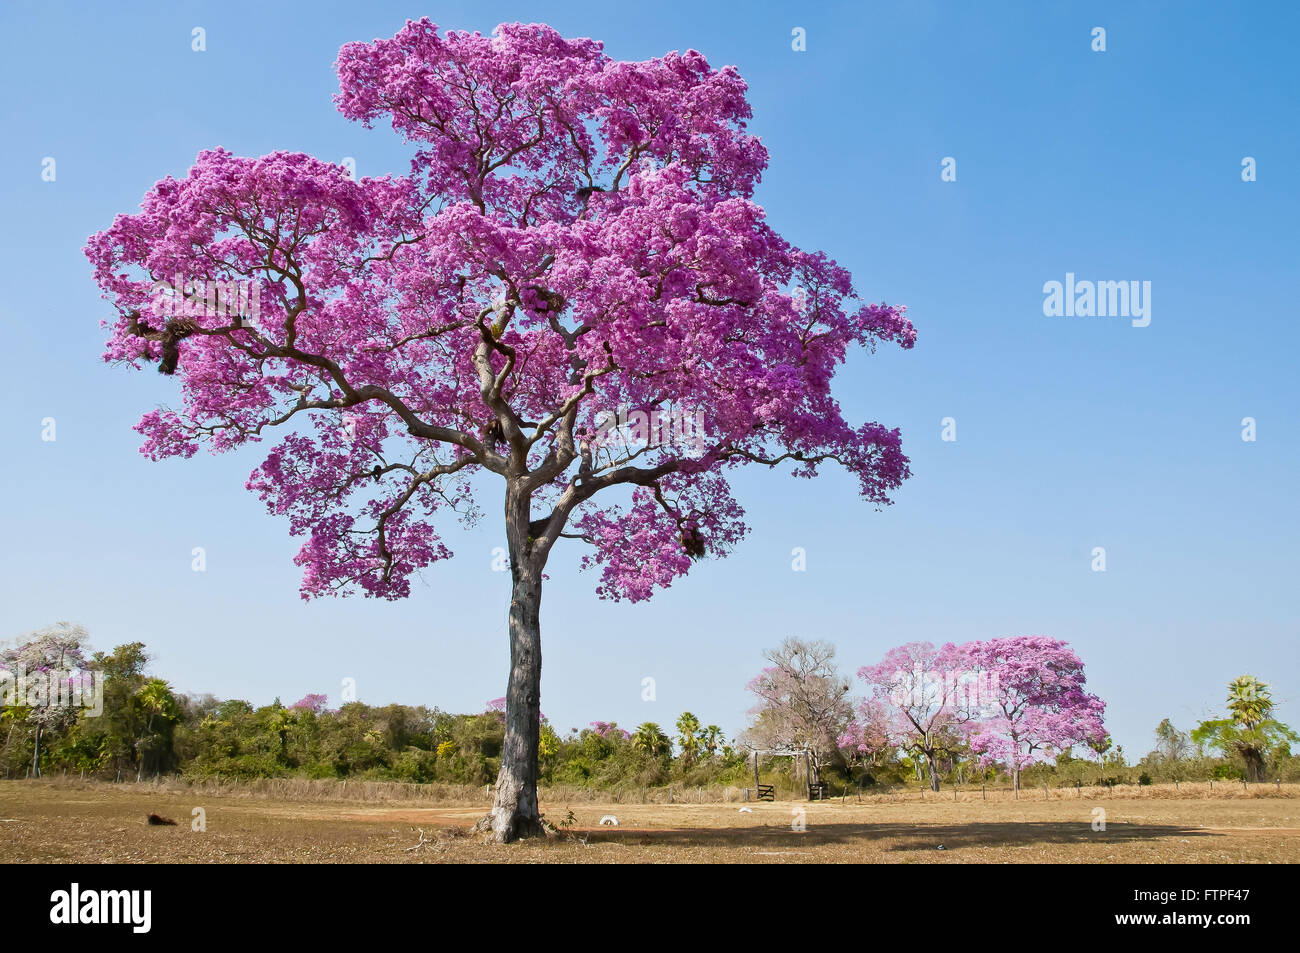 IPE Ipe-lila oder pink genannt auch Piuva das Pantanal - Tabebuia sp Stockfoto